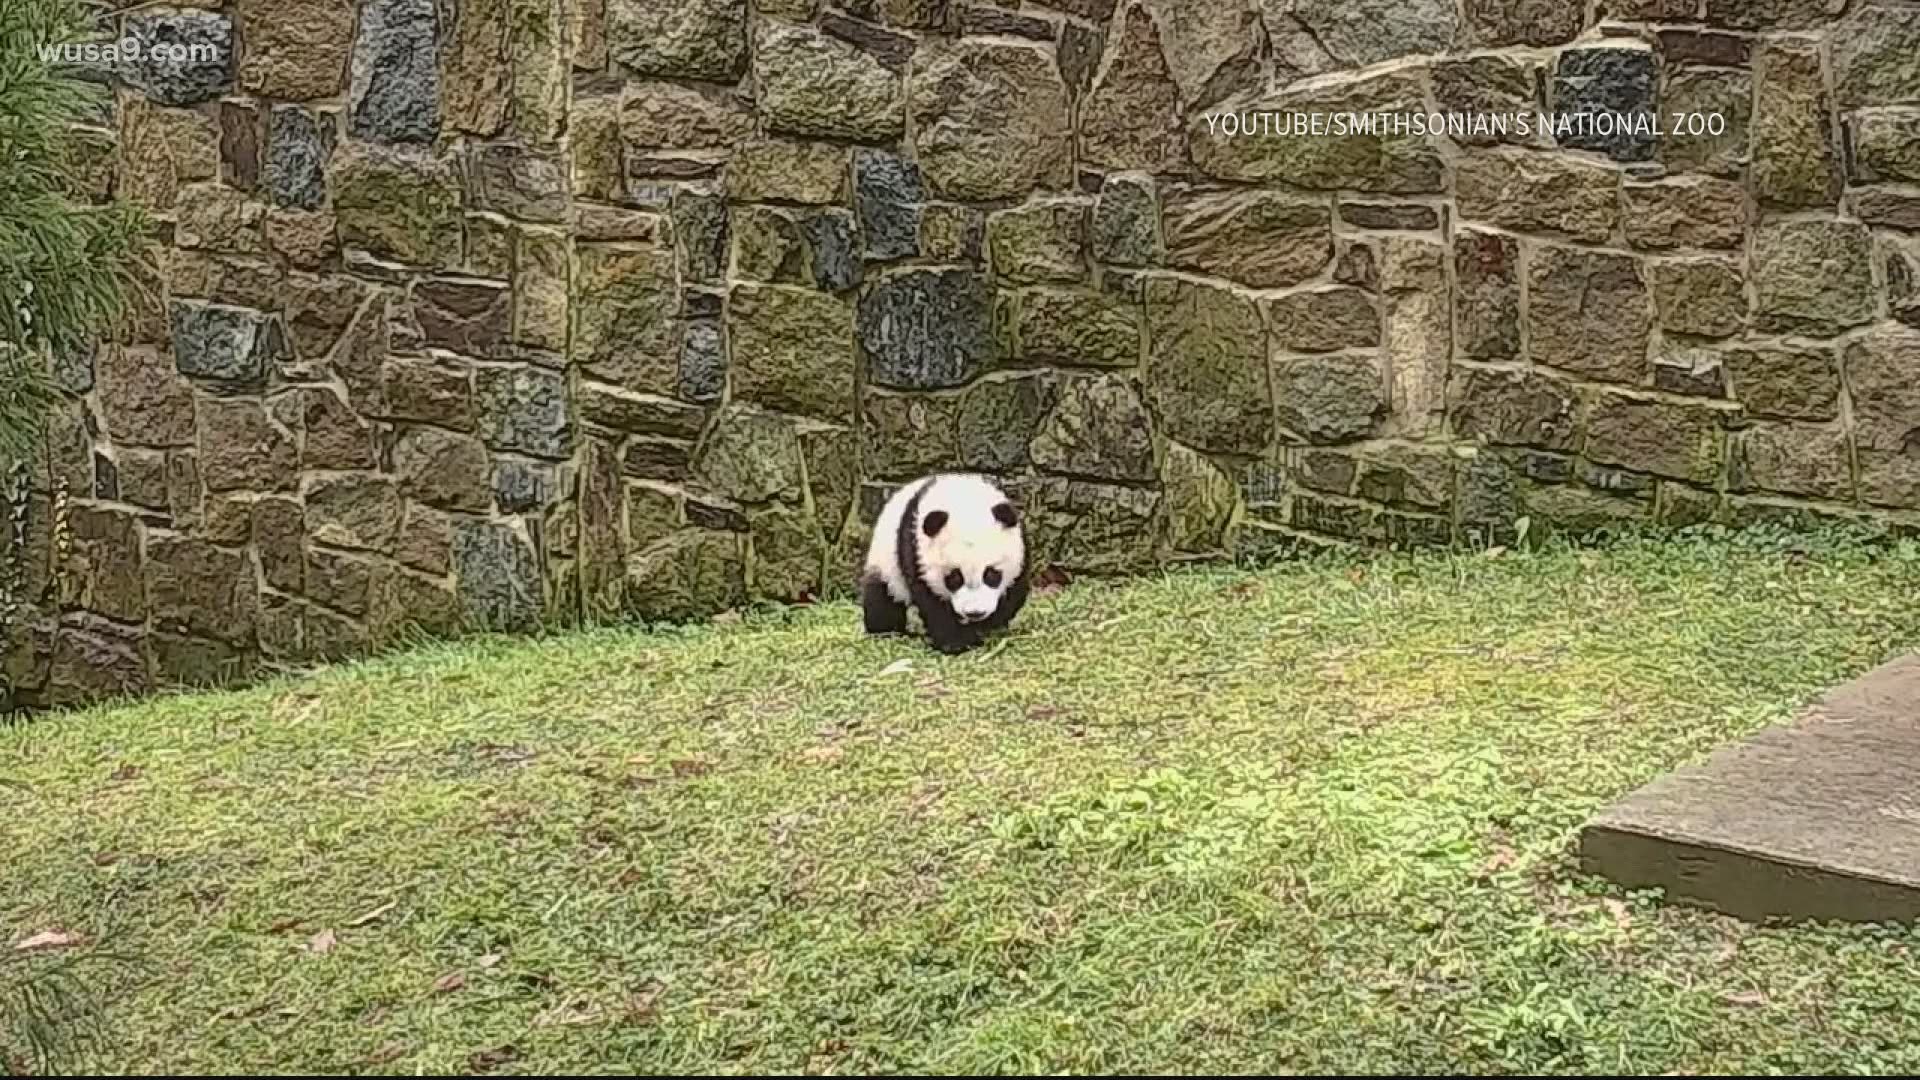 Giant panda cam National Zoo snow, outdoor habitat Smithsonian 